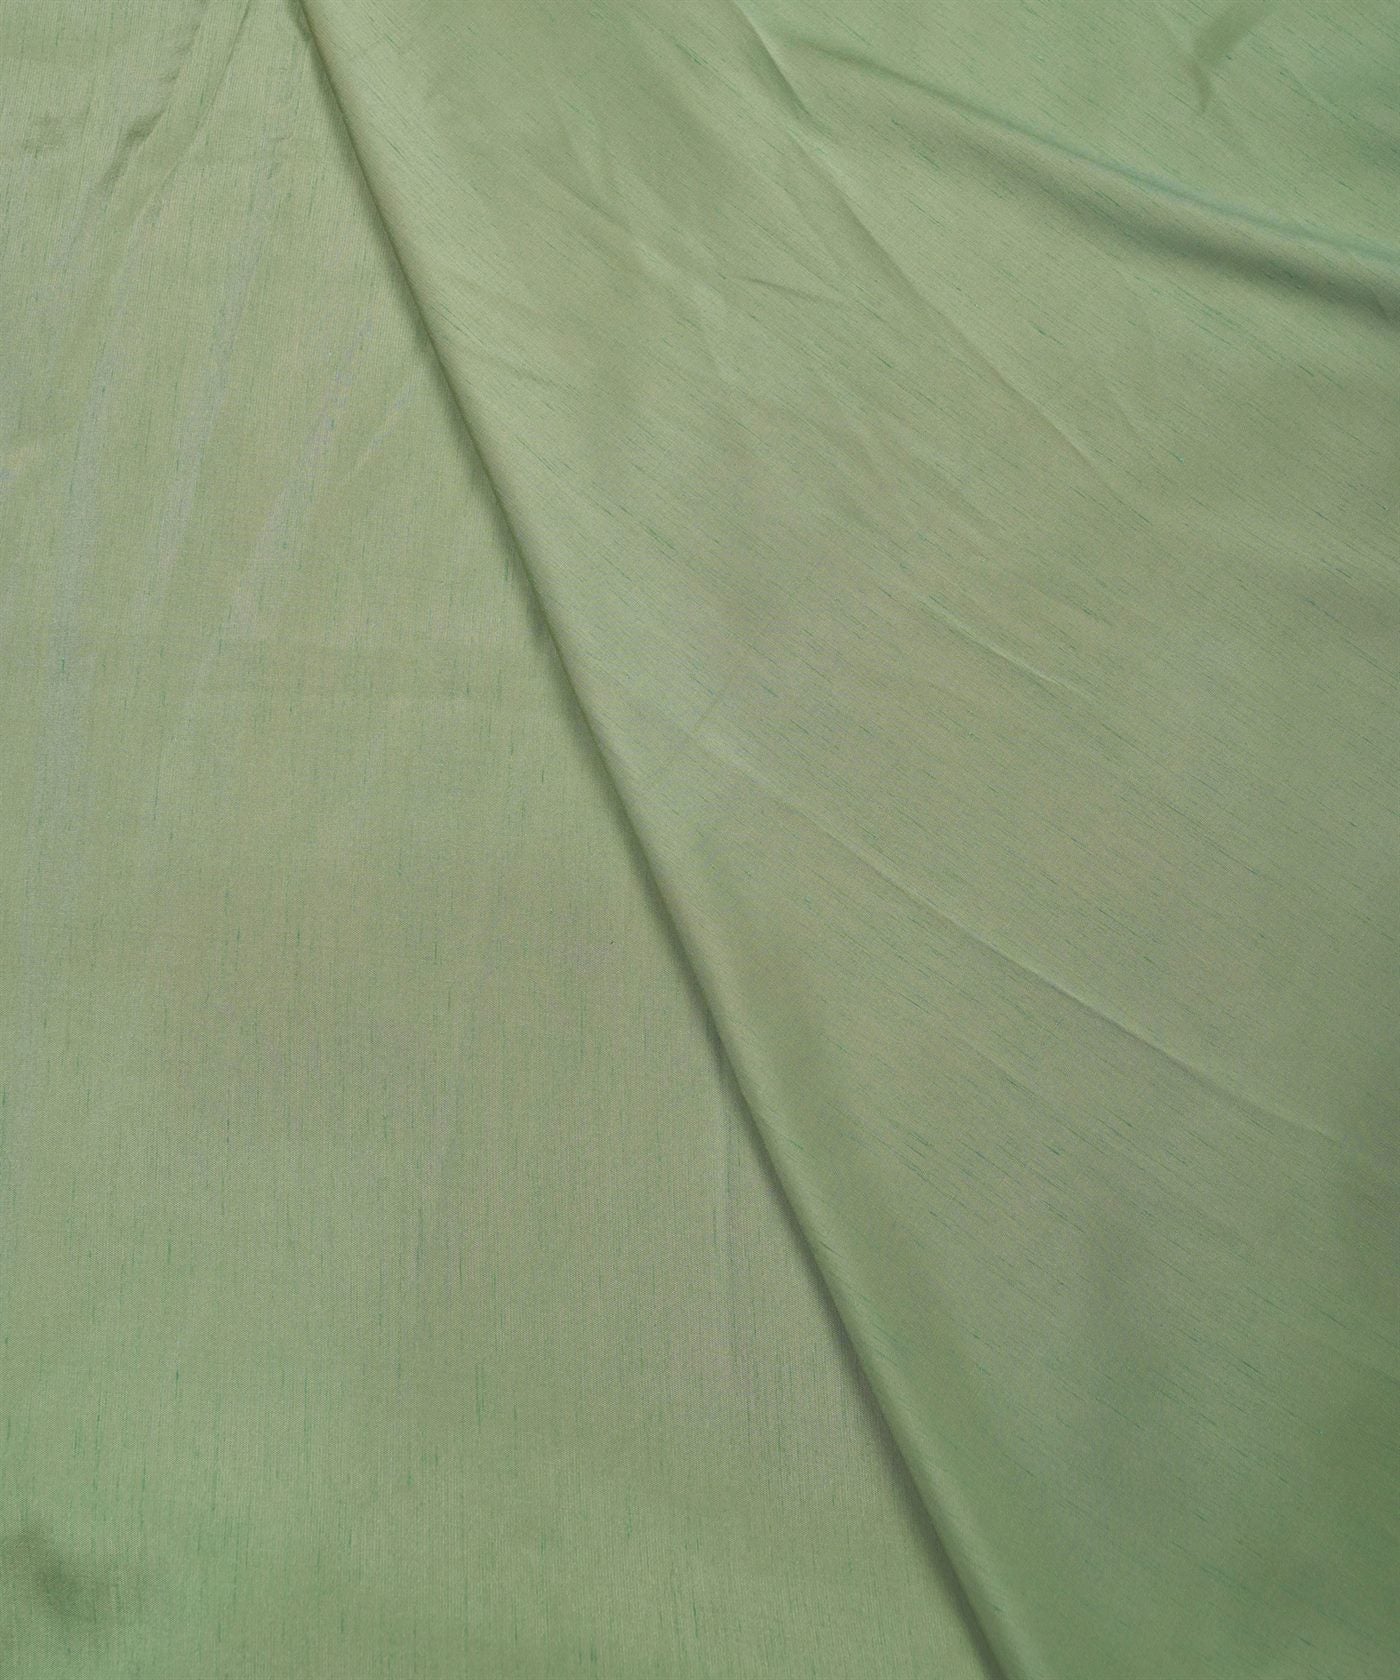 Olive Green Plain Dyed Satin Slub Fabric